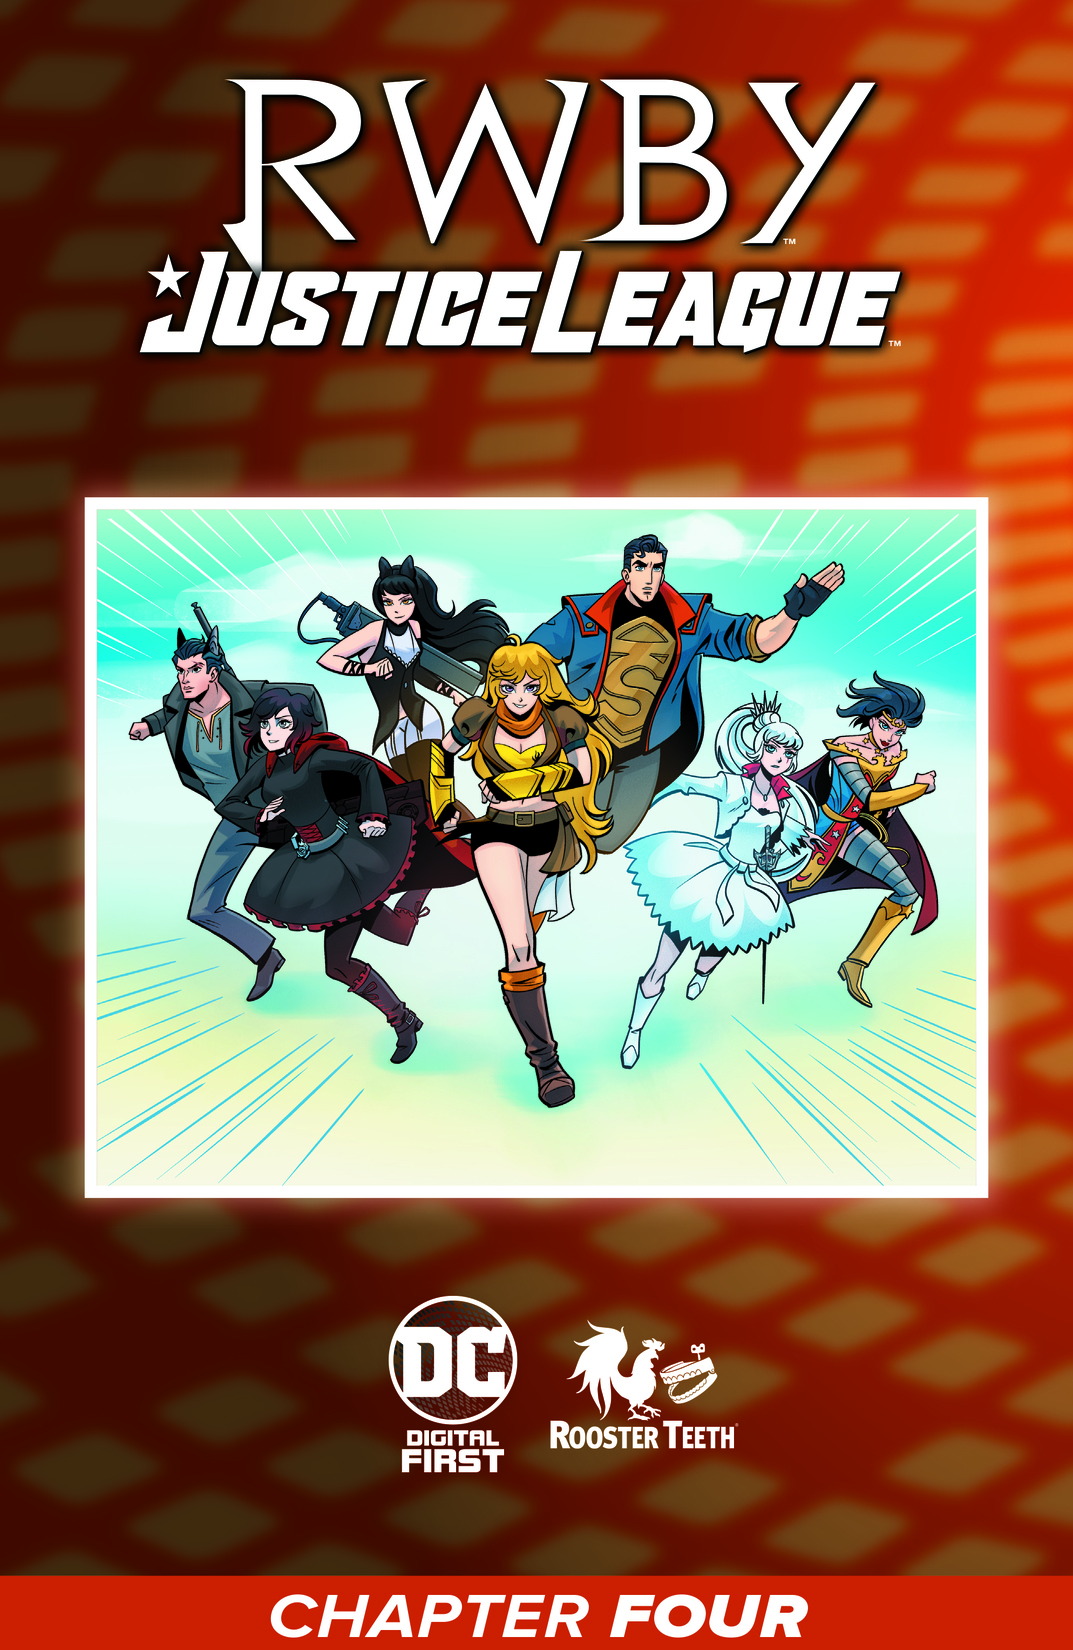 RWBY/Justice League #4 preview images